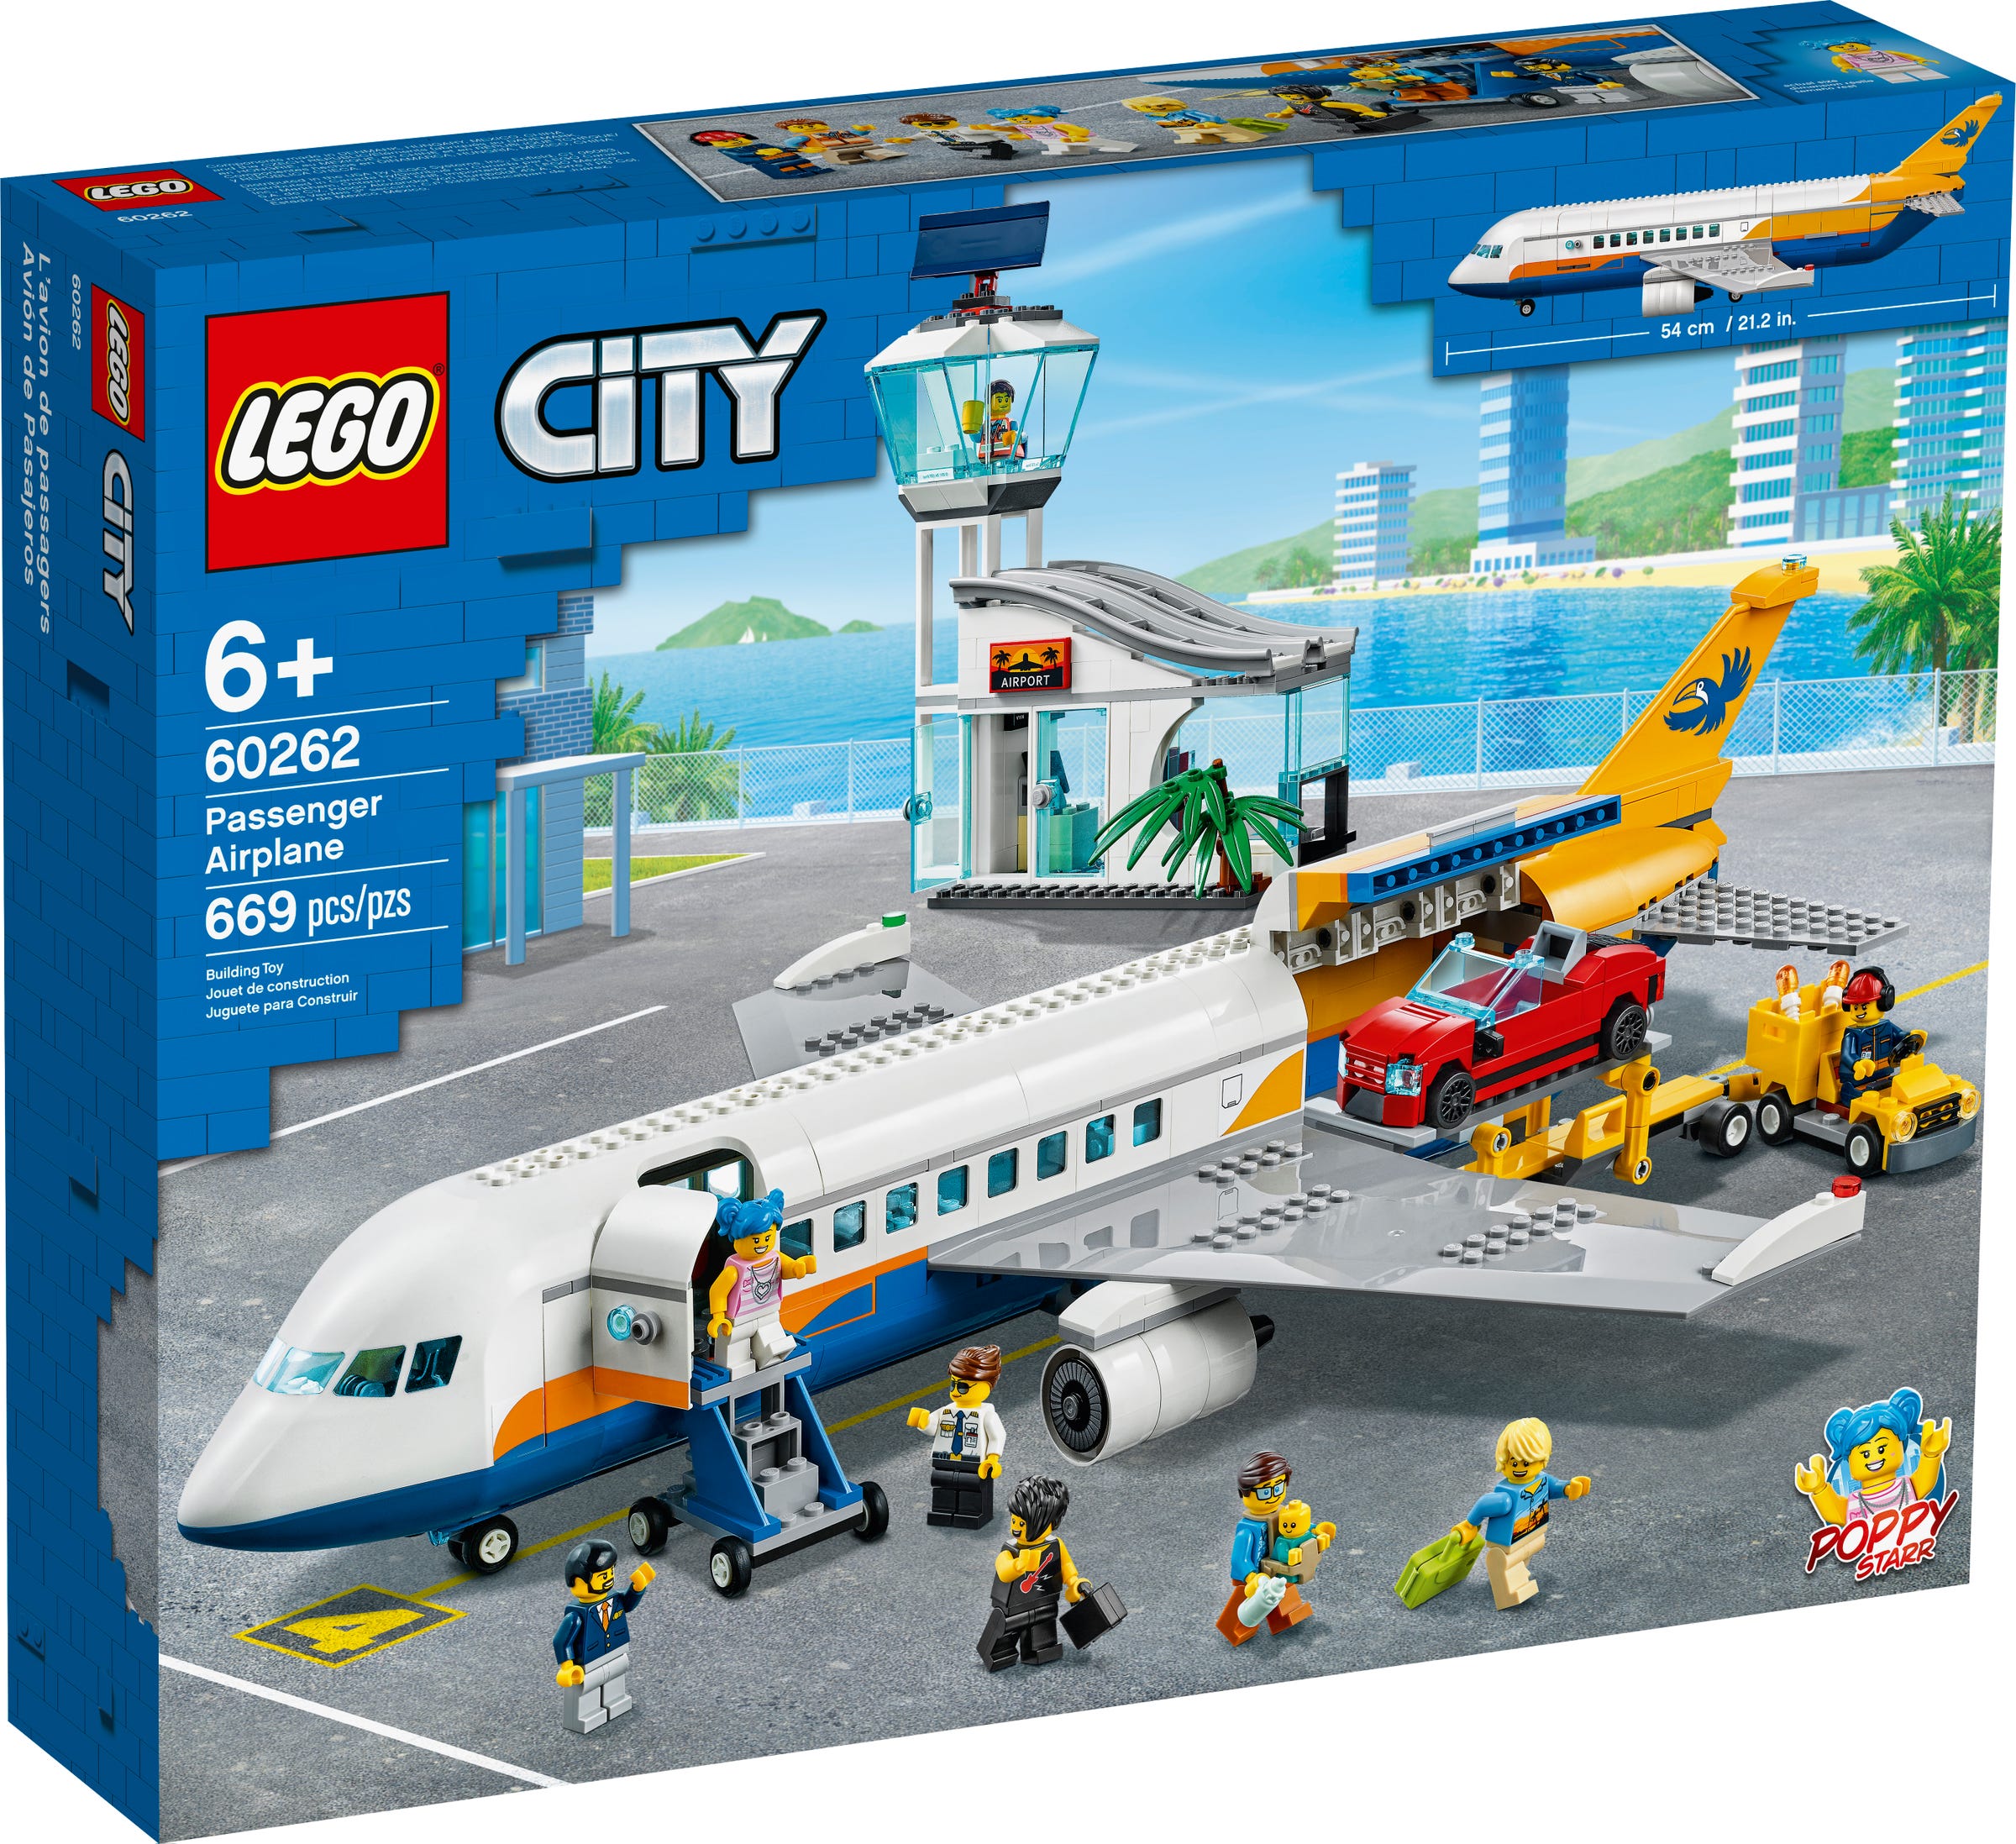 BRICK4U LEGO CITY - 60262 - PASSENGER AIRPLANE